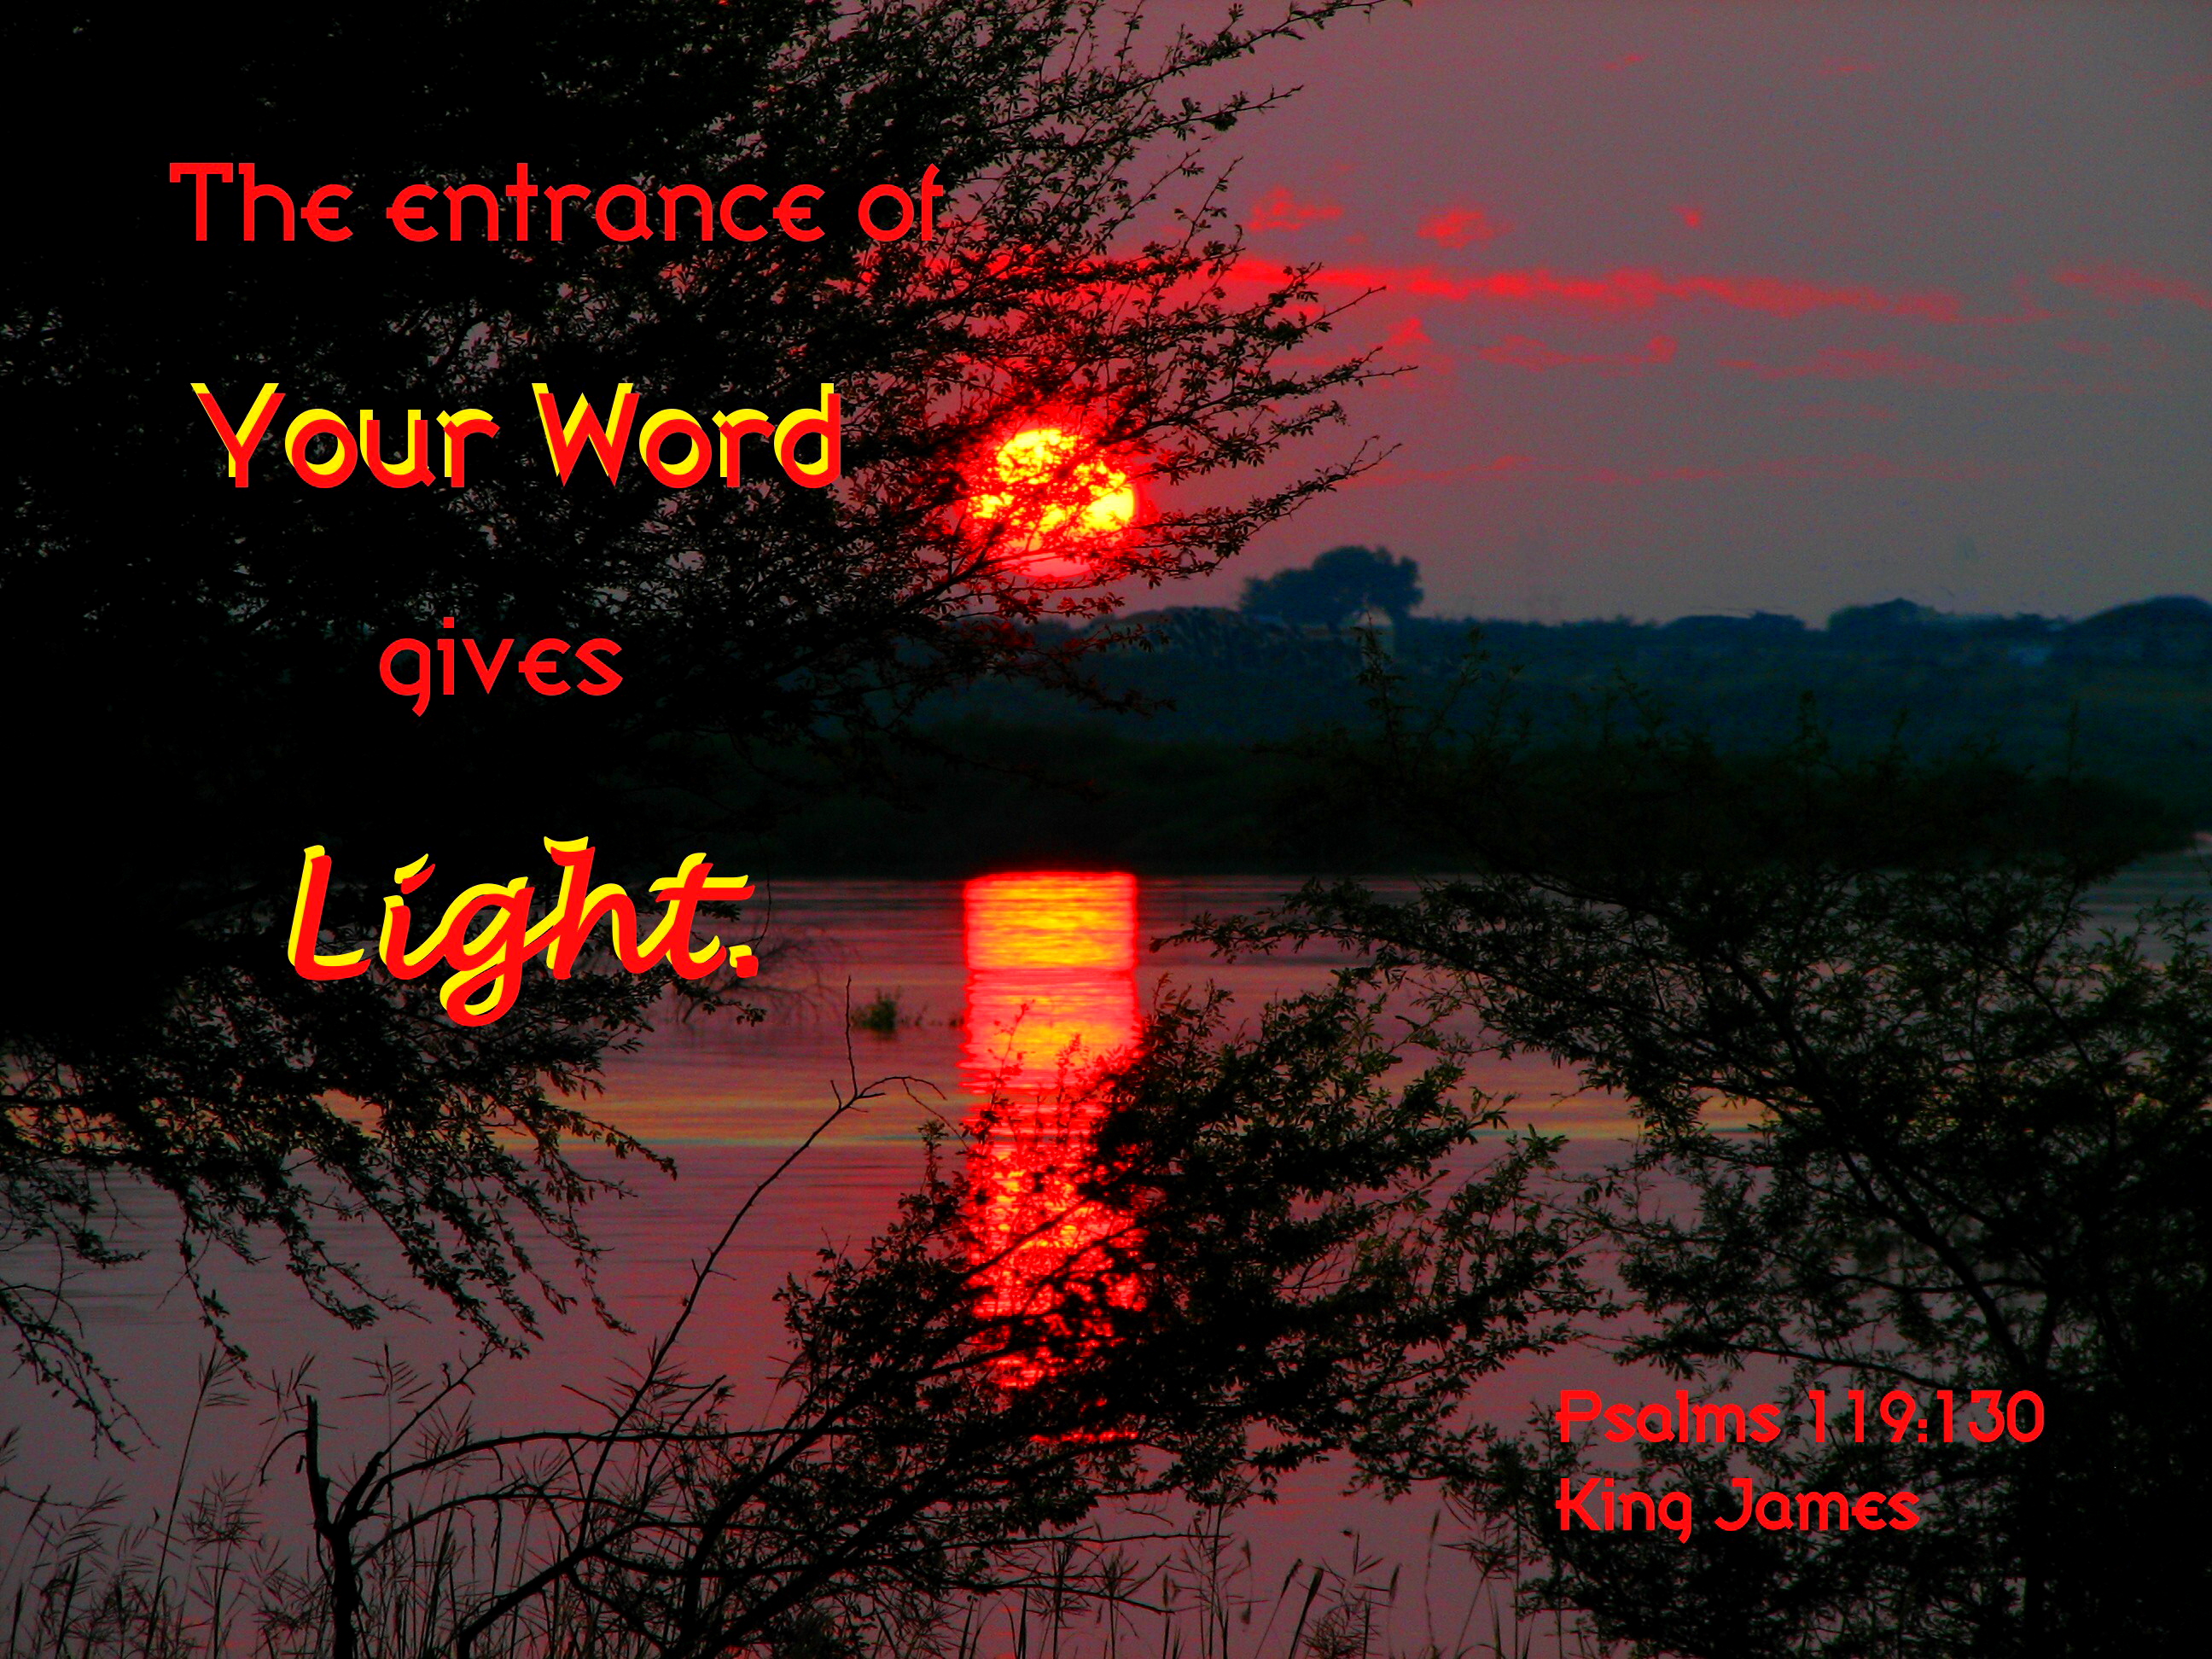 God's word gives light photo